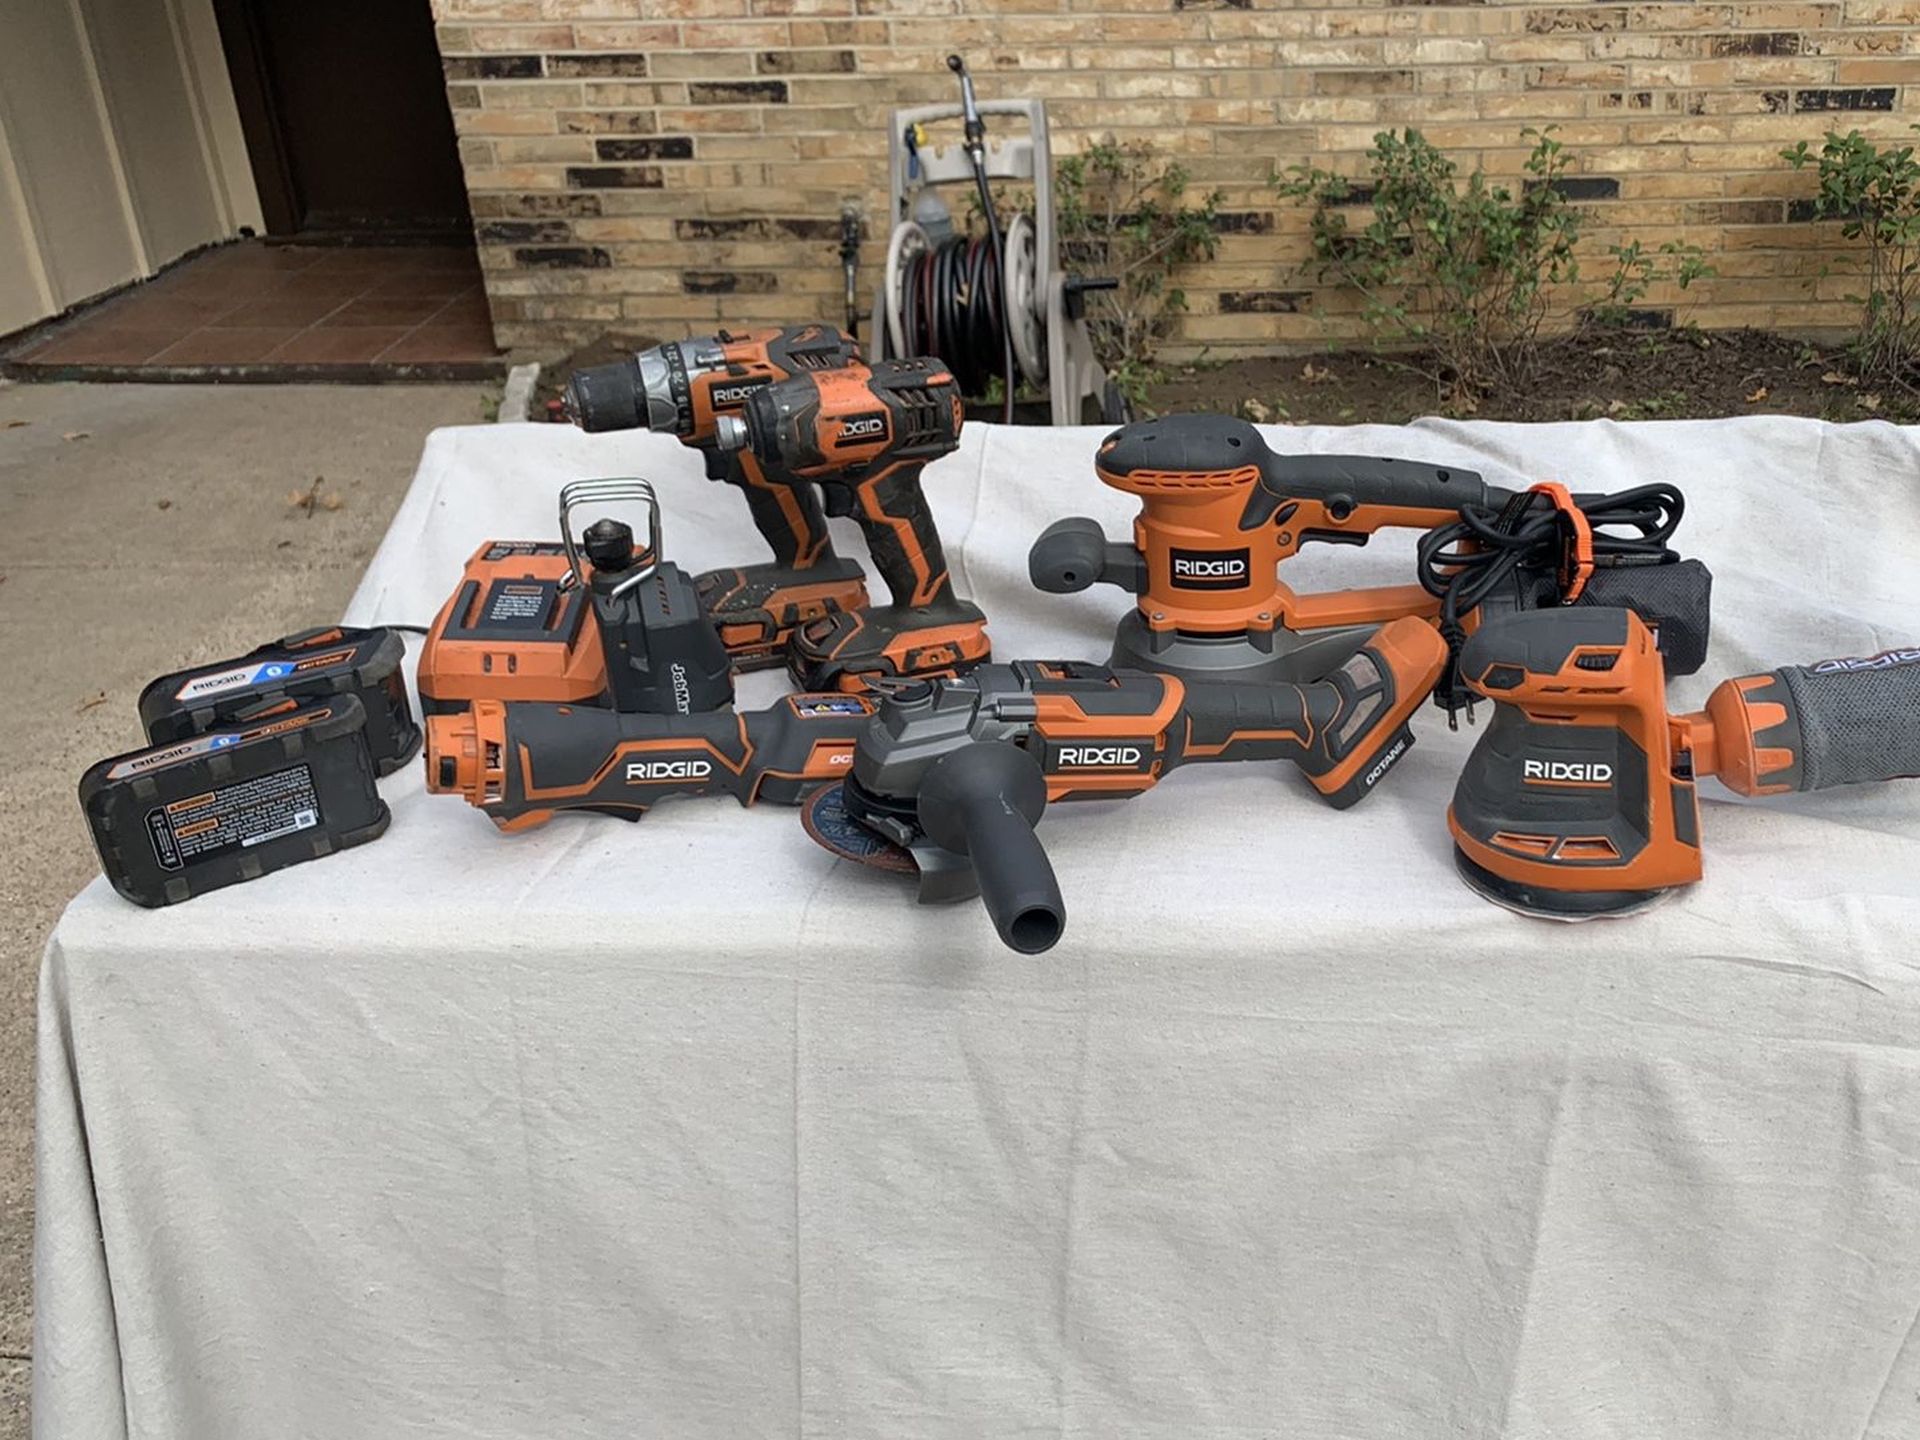 Rigid power tools. Sanders, drill driver, impact, router, grinder, Job Max